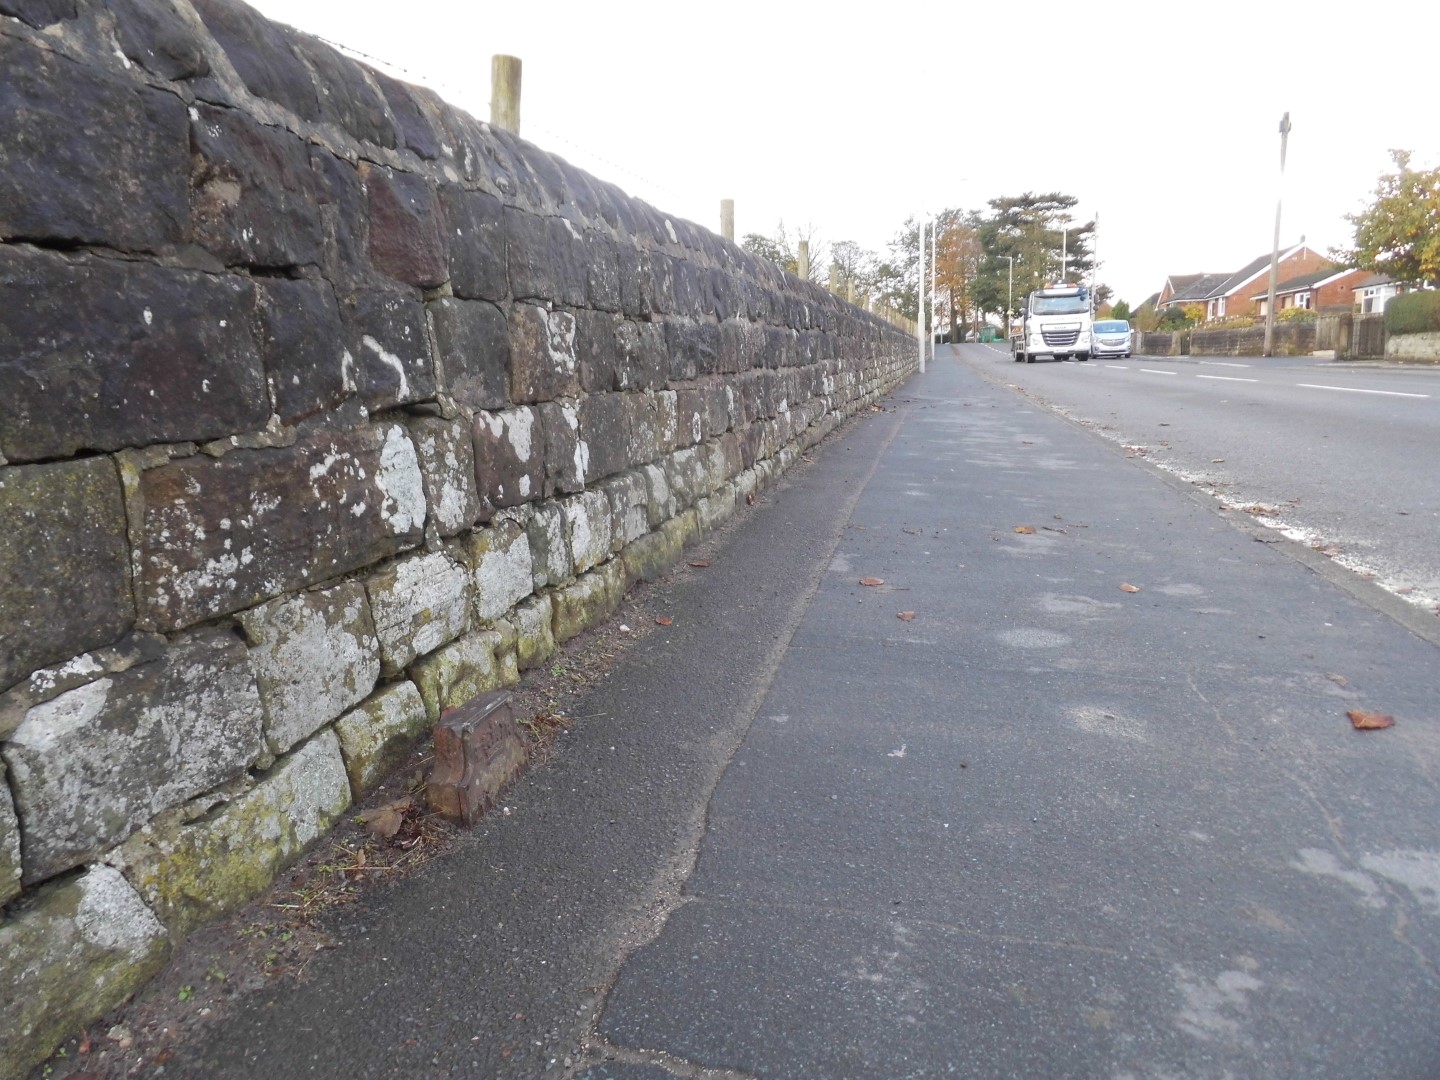 Telegraph cable marker post at opp. 134 Garstang Road, Catterall, Preston by Derek Pattenson 